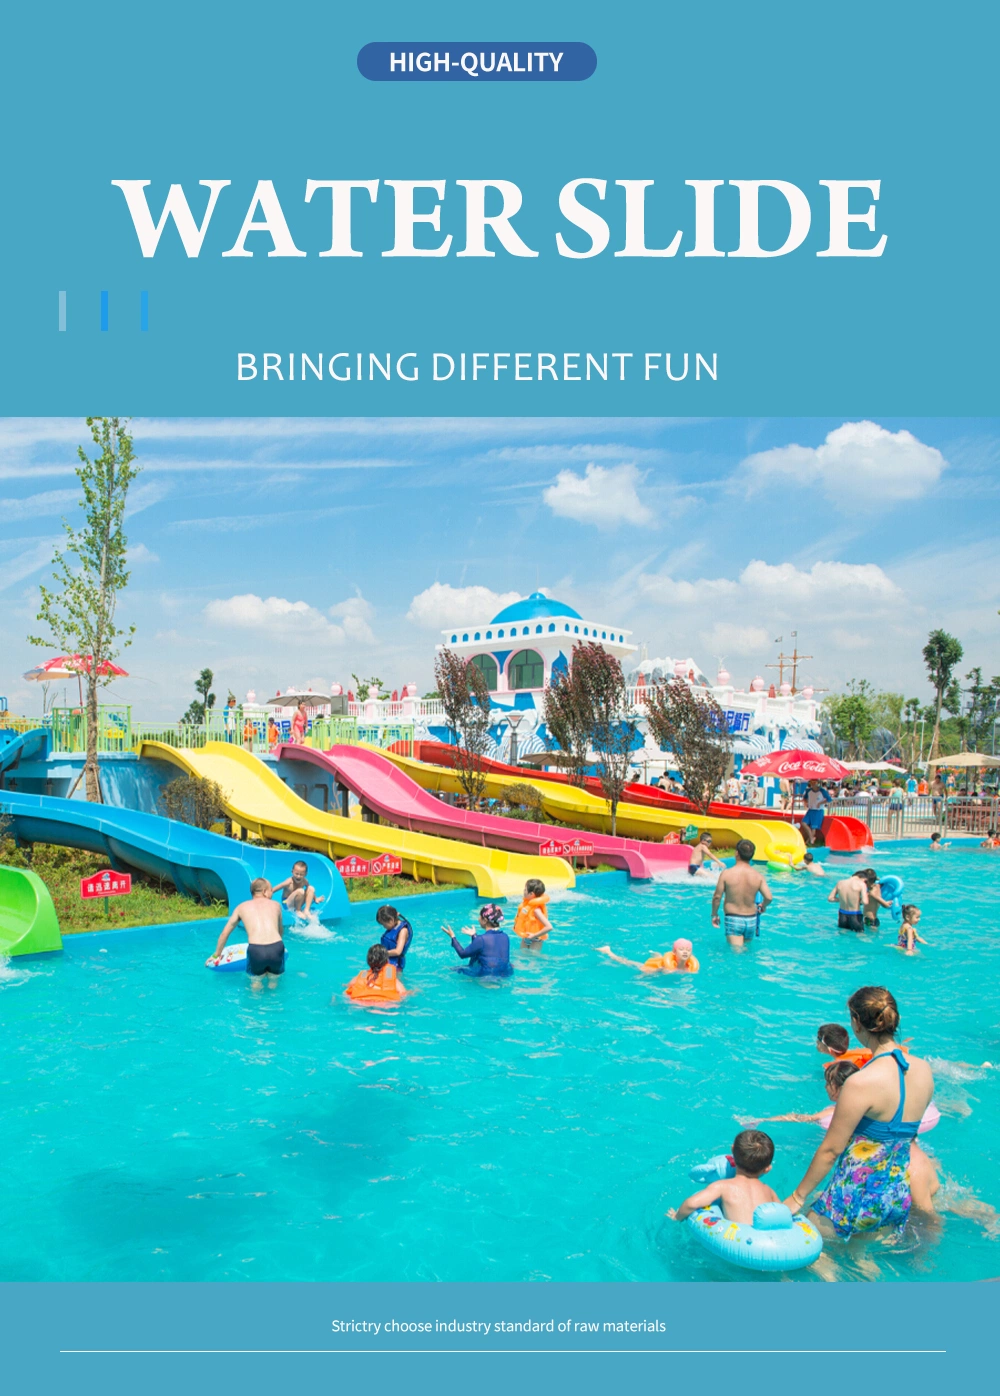 Large Rainbow Spiral Slide on Water Park Glass Fiber Commercial Outdoor Slide